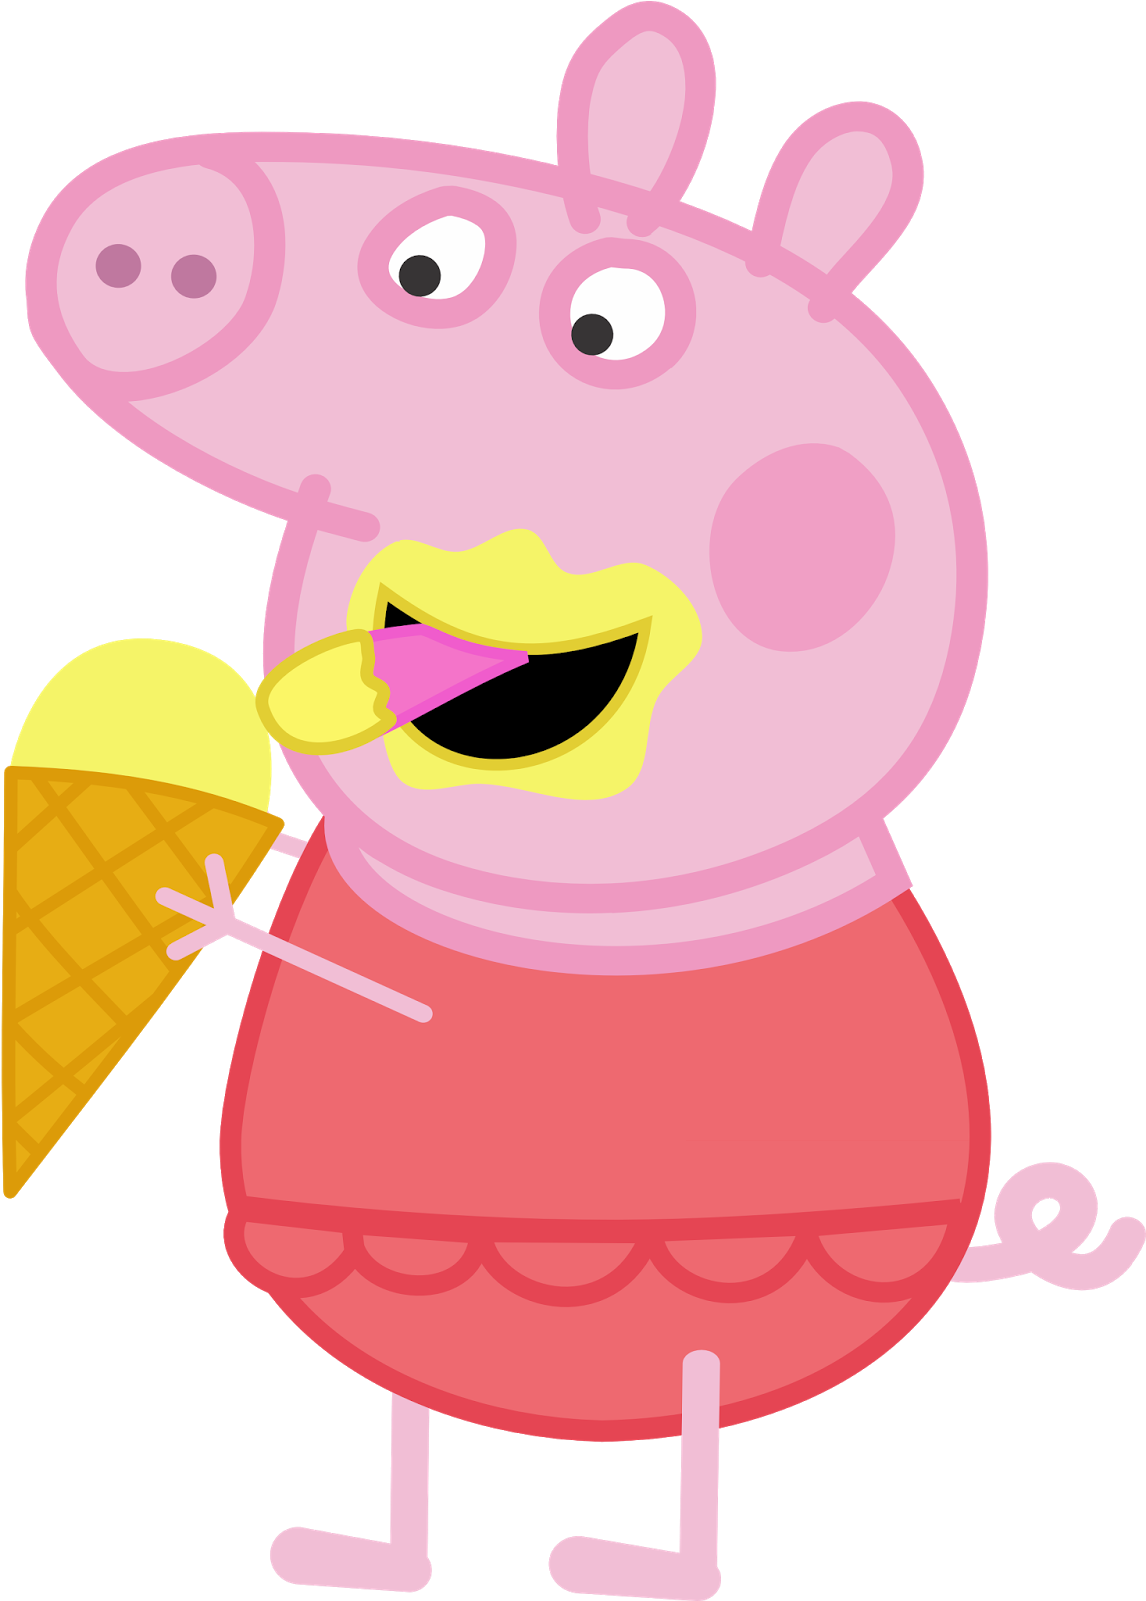 Daddy Pig Mummy Pig George Pig Clip Art - Peppa Pig .png (1160x1600)